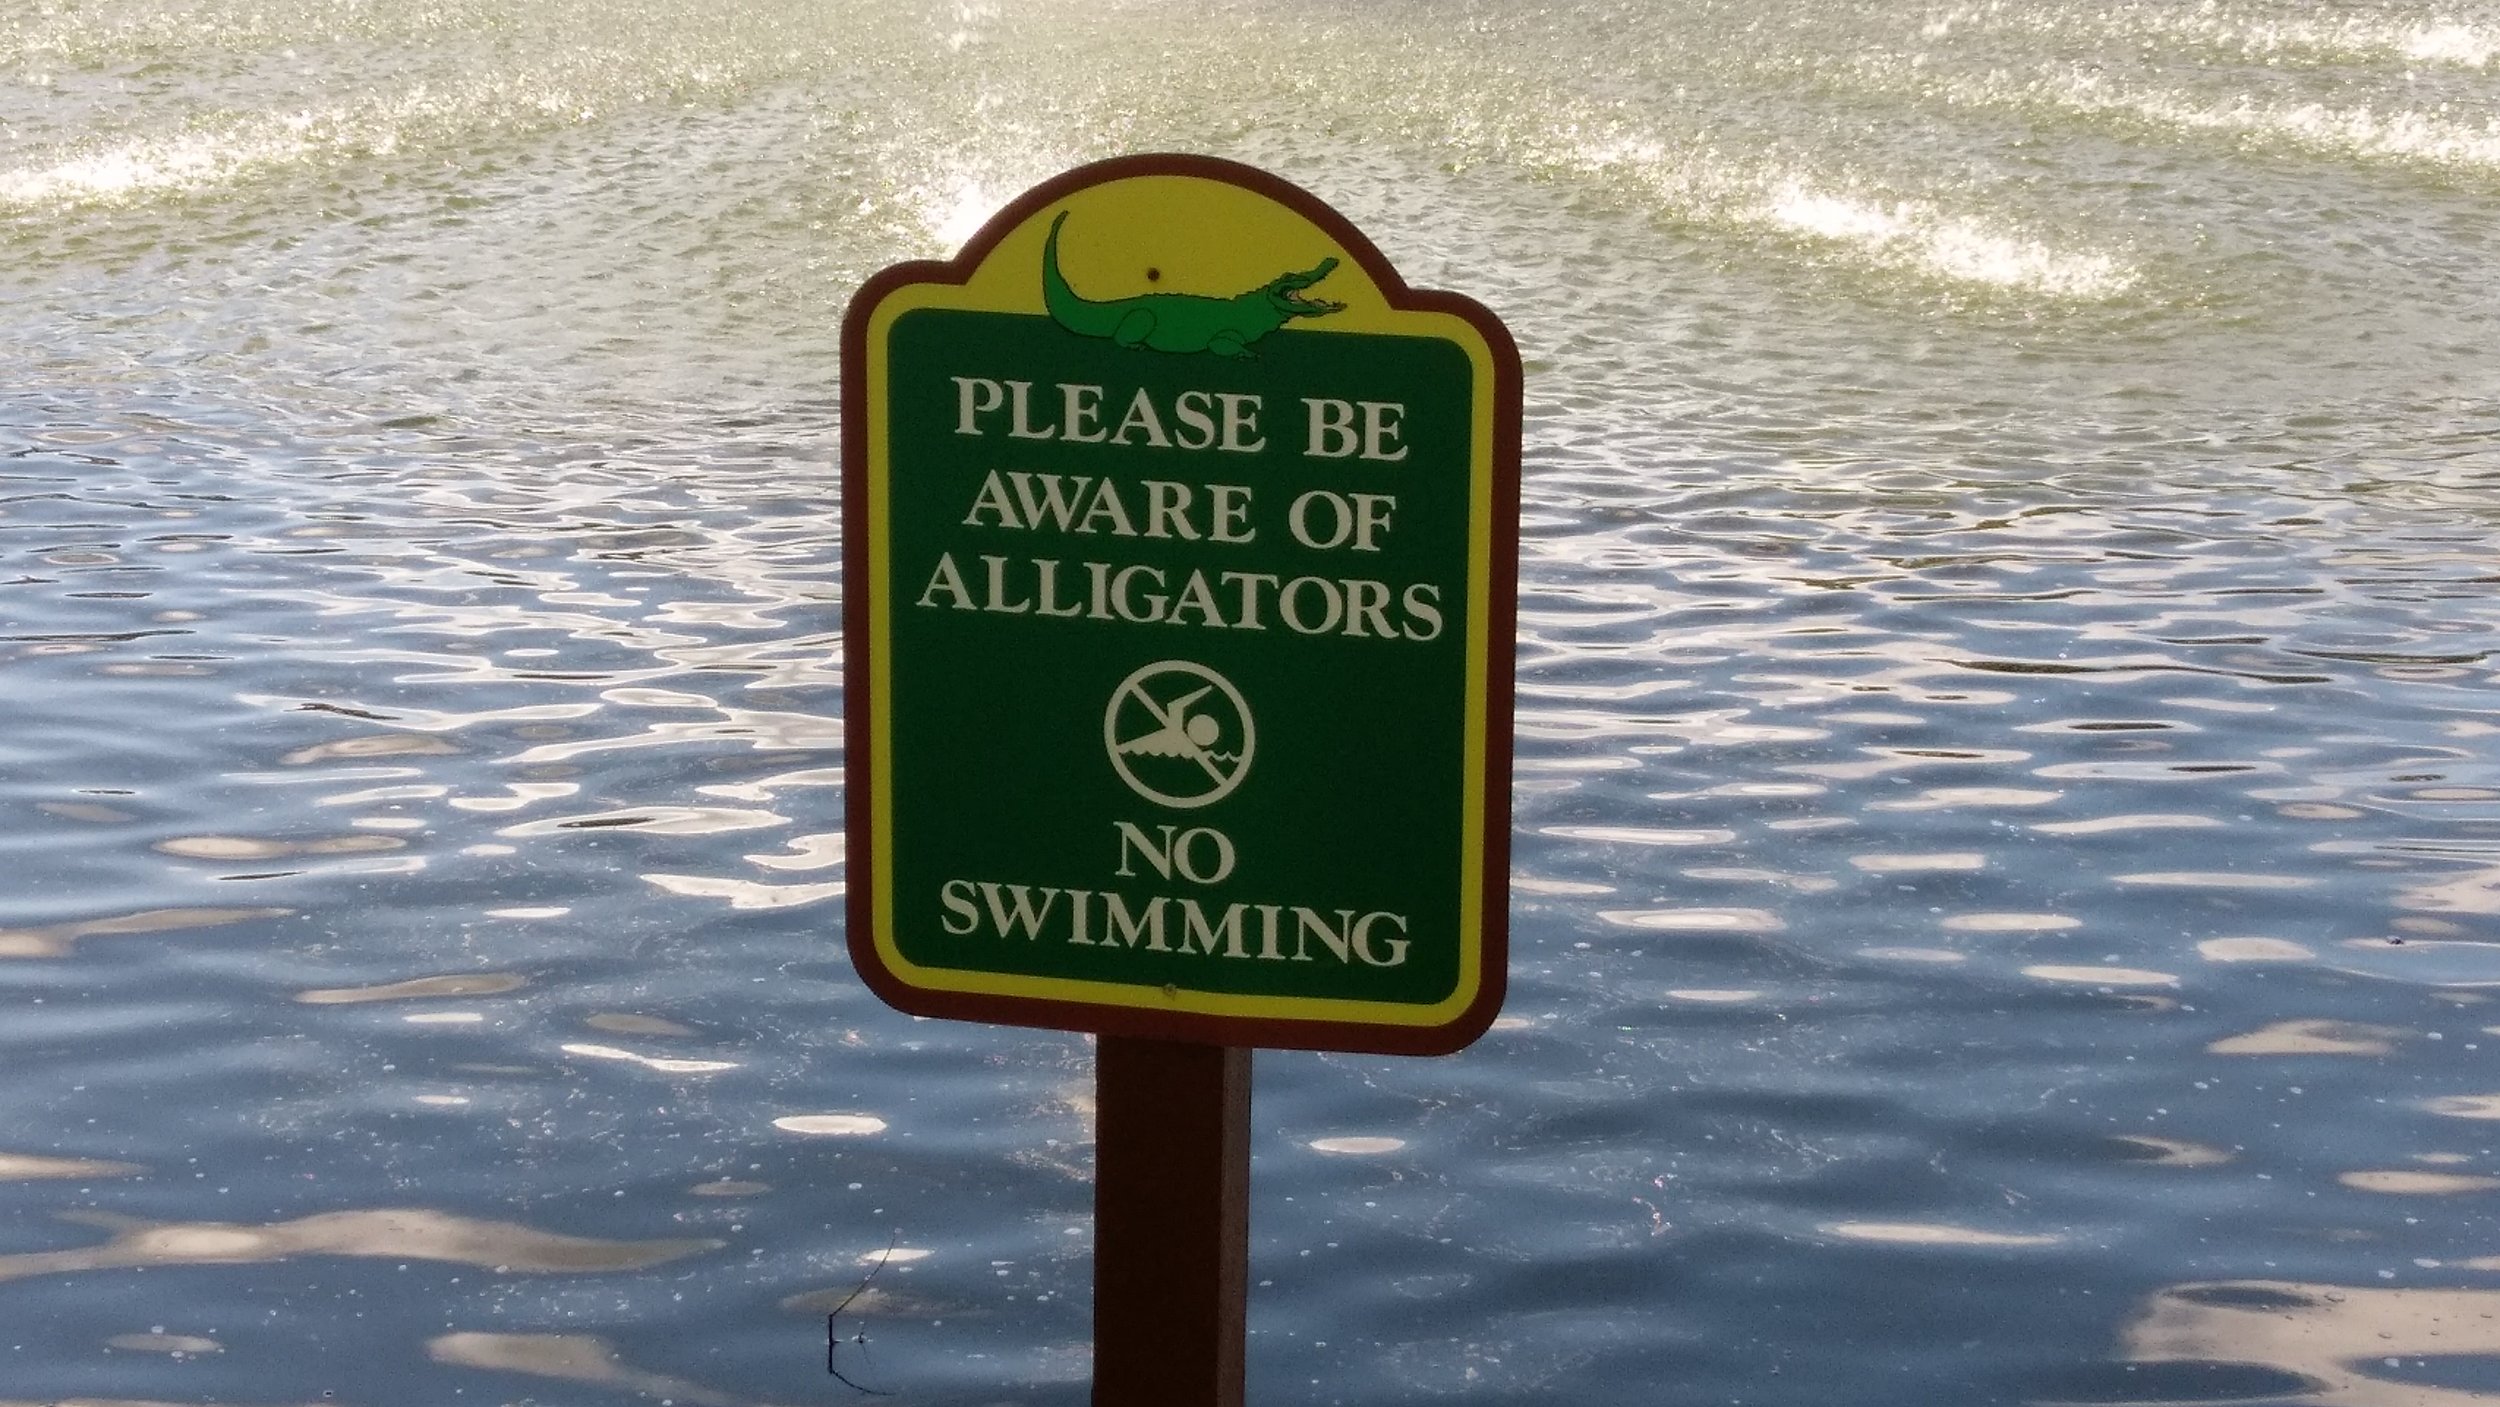 Don't go swimming